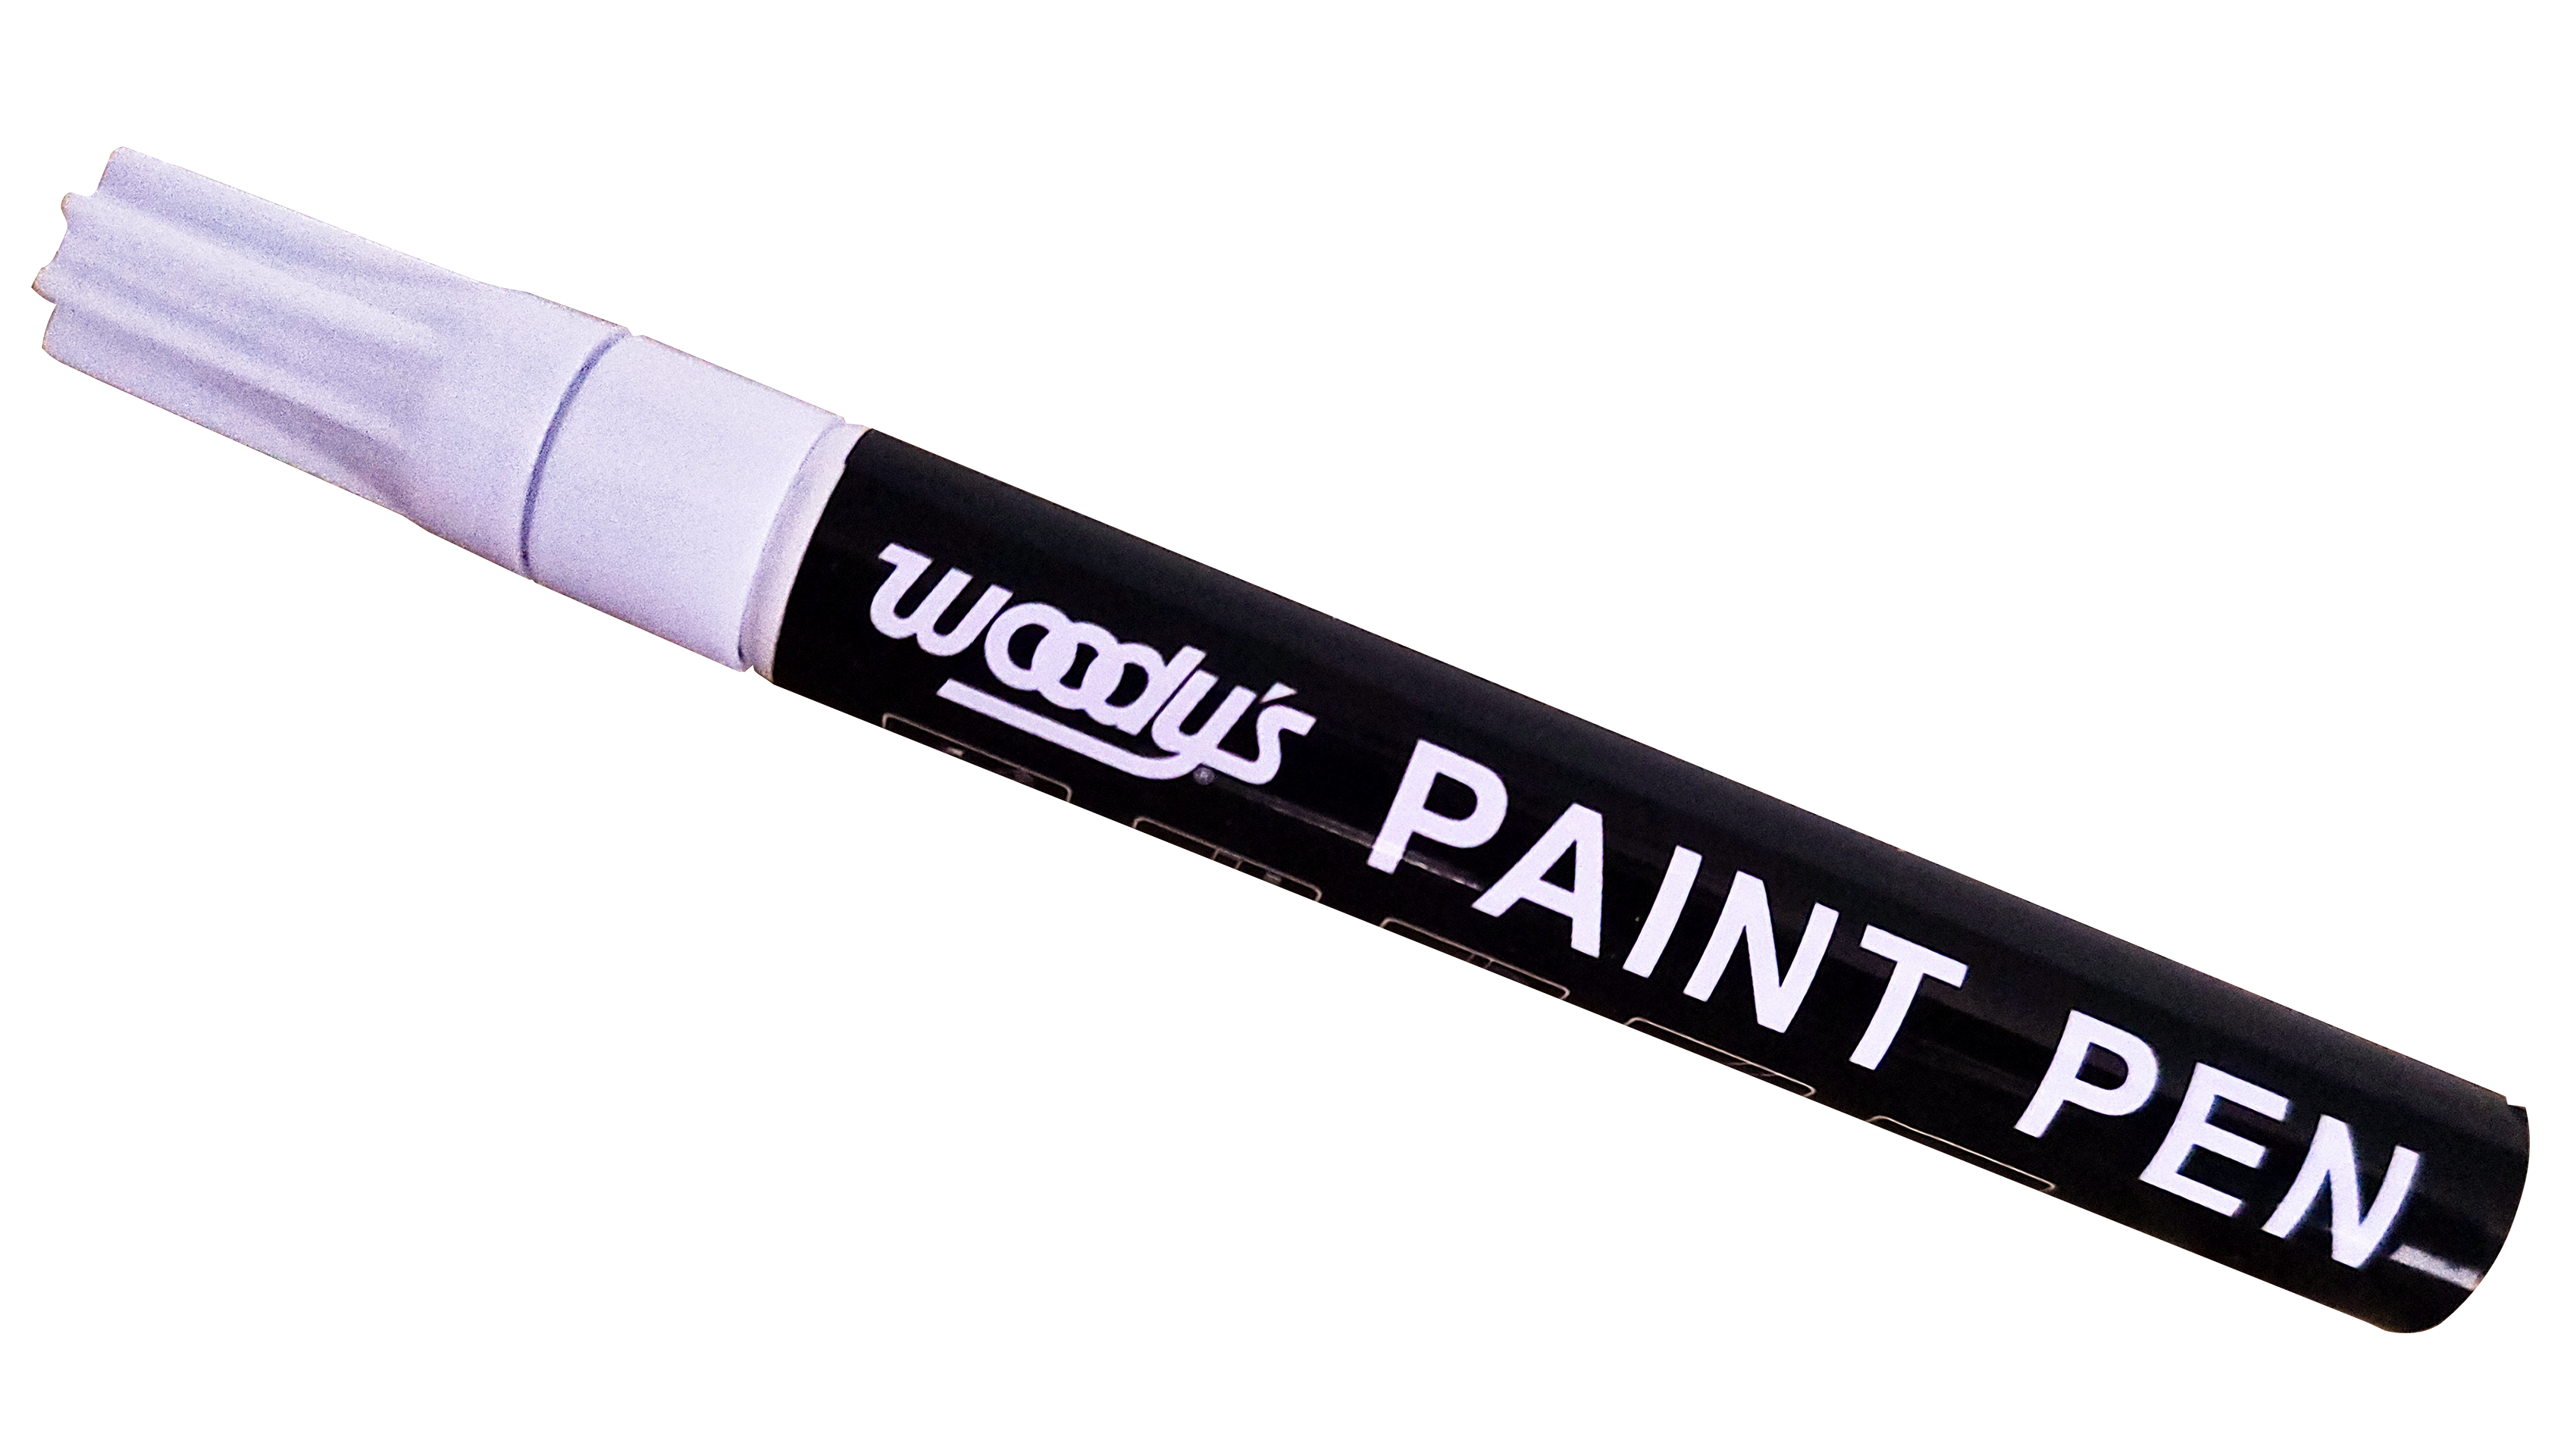 Woody's Paint Pen